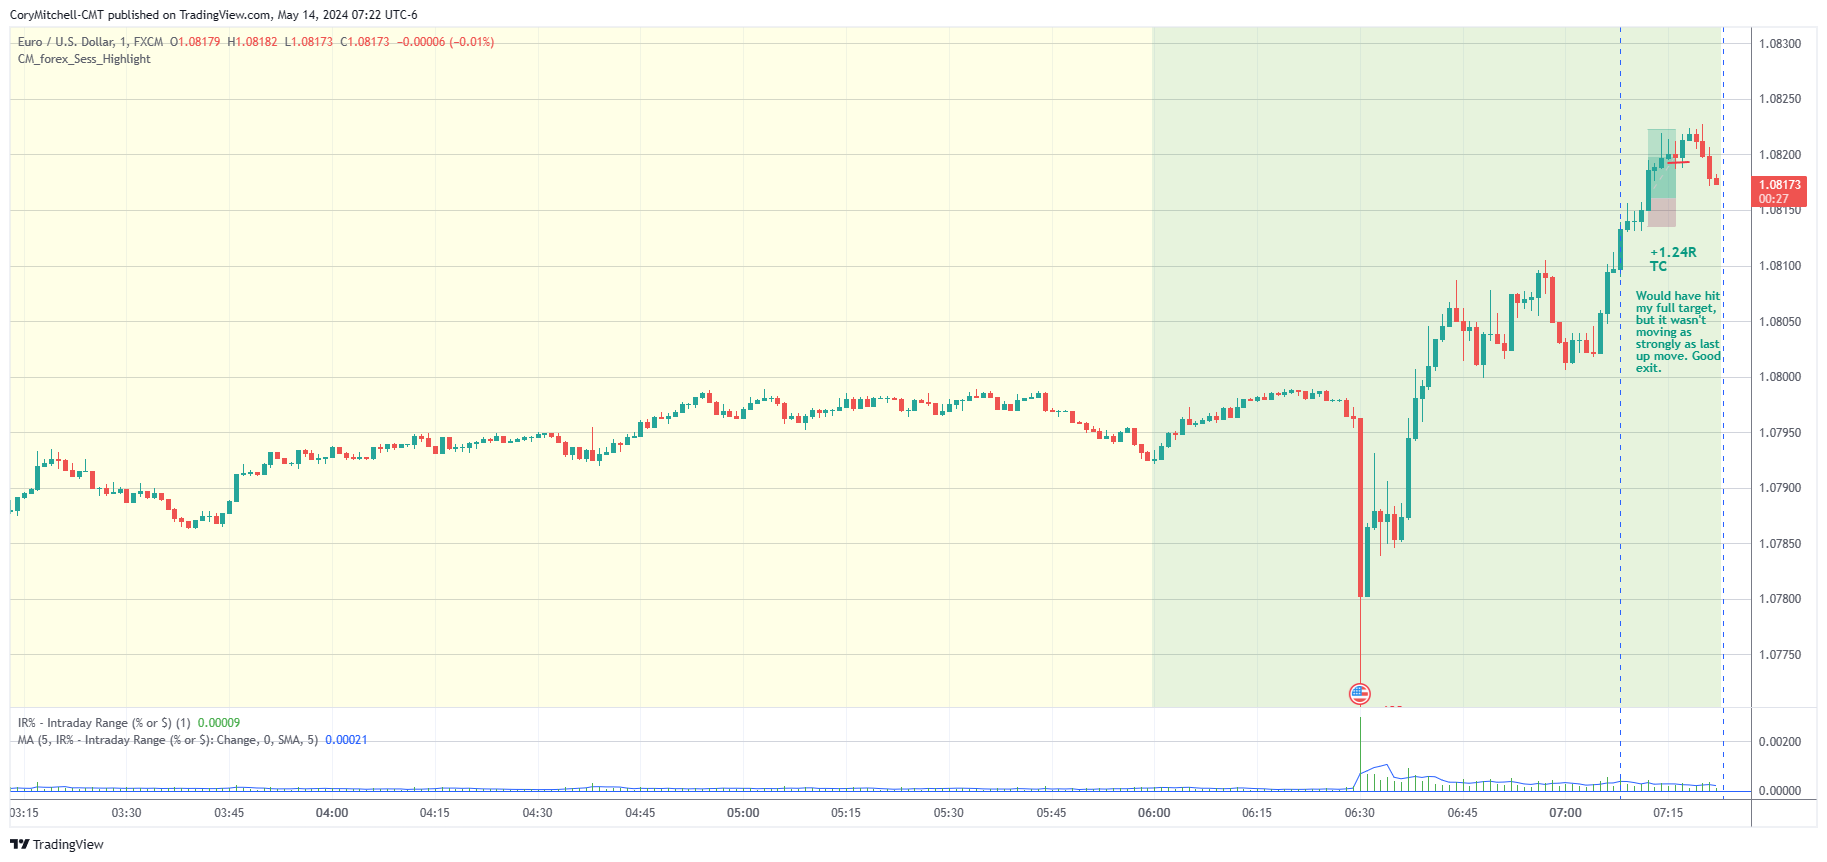 EURUSD 1 minute chart day trading examples May 14 2024